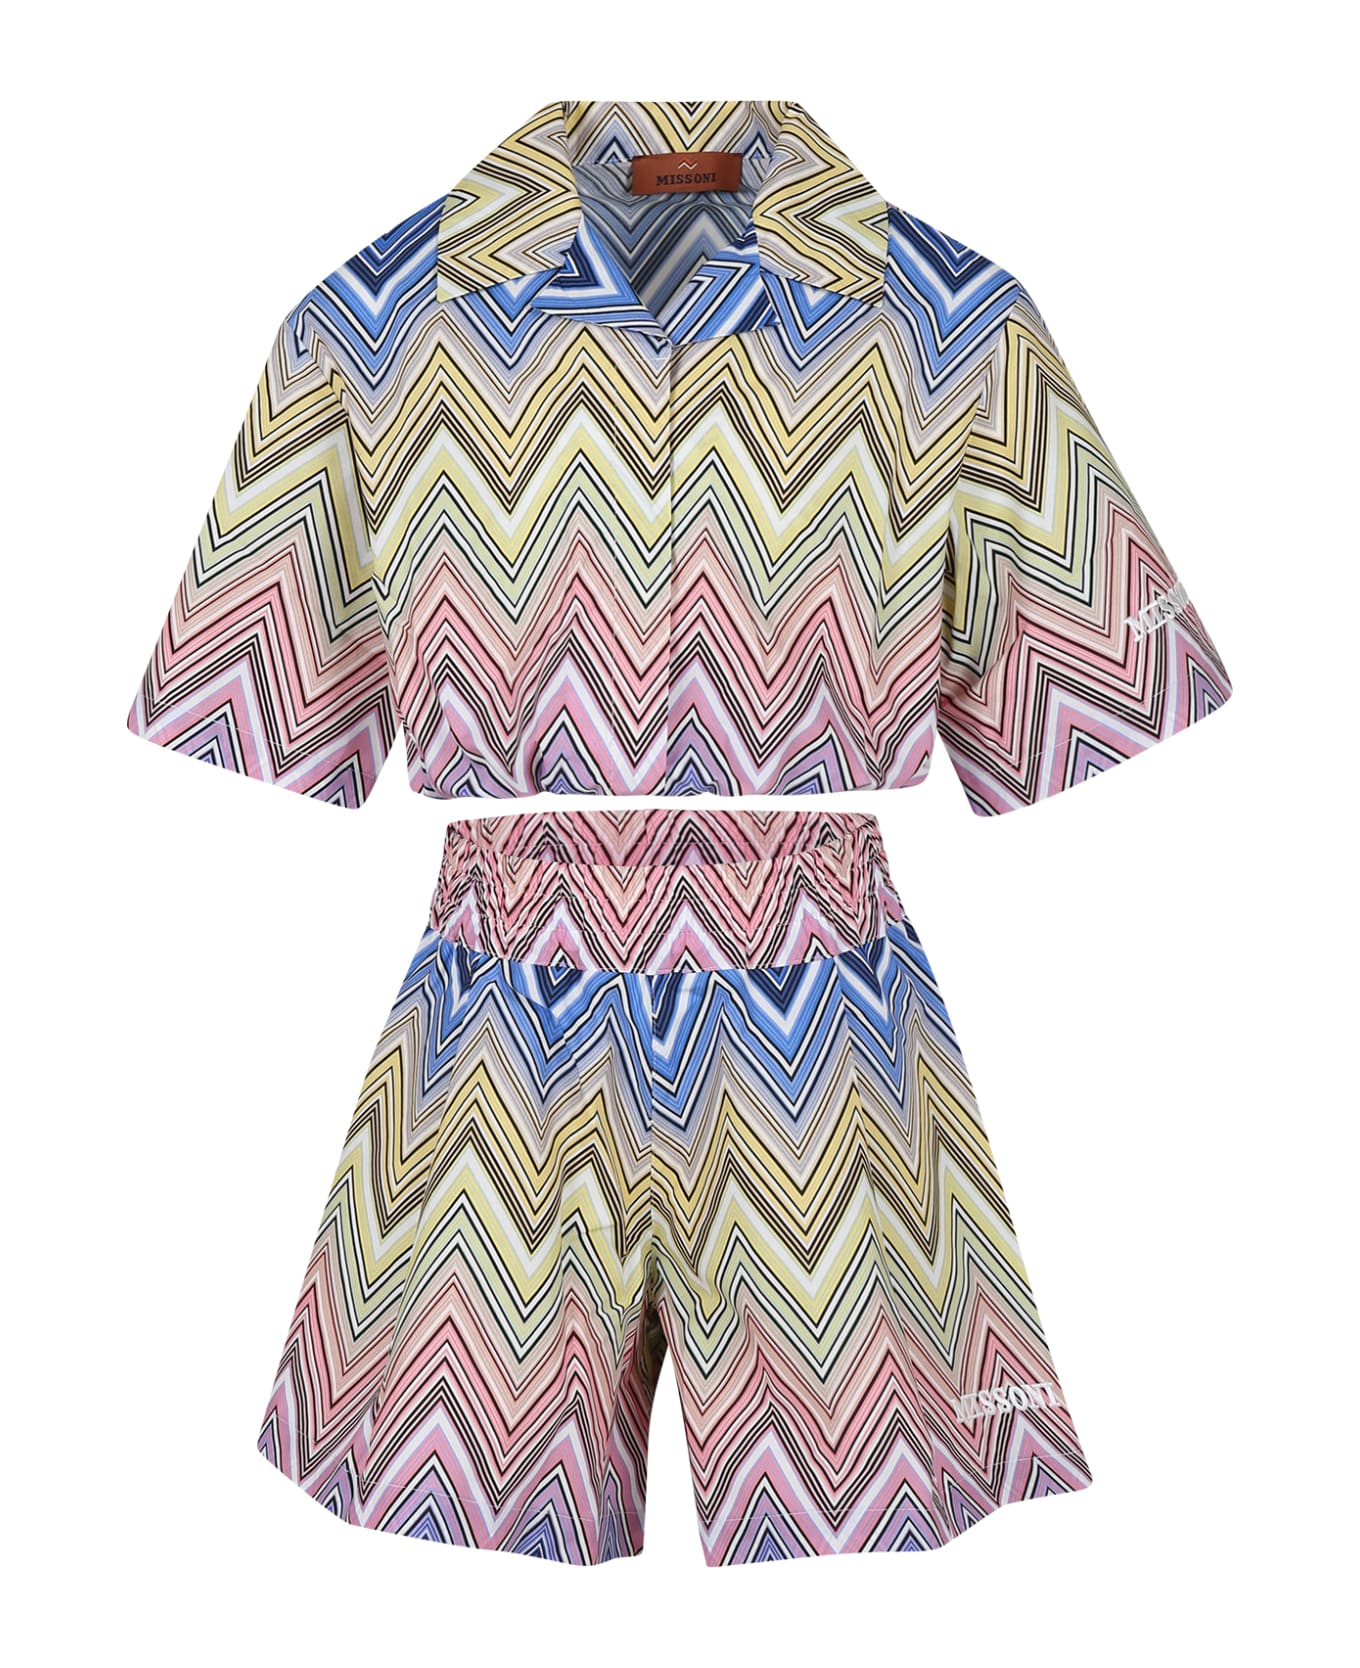 Missoni Multicolor Suit For Girl With Chevron Pattern - Multicolor ジャンプスーツ